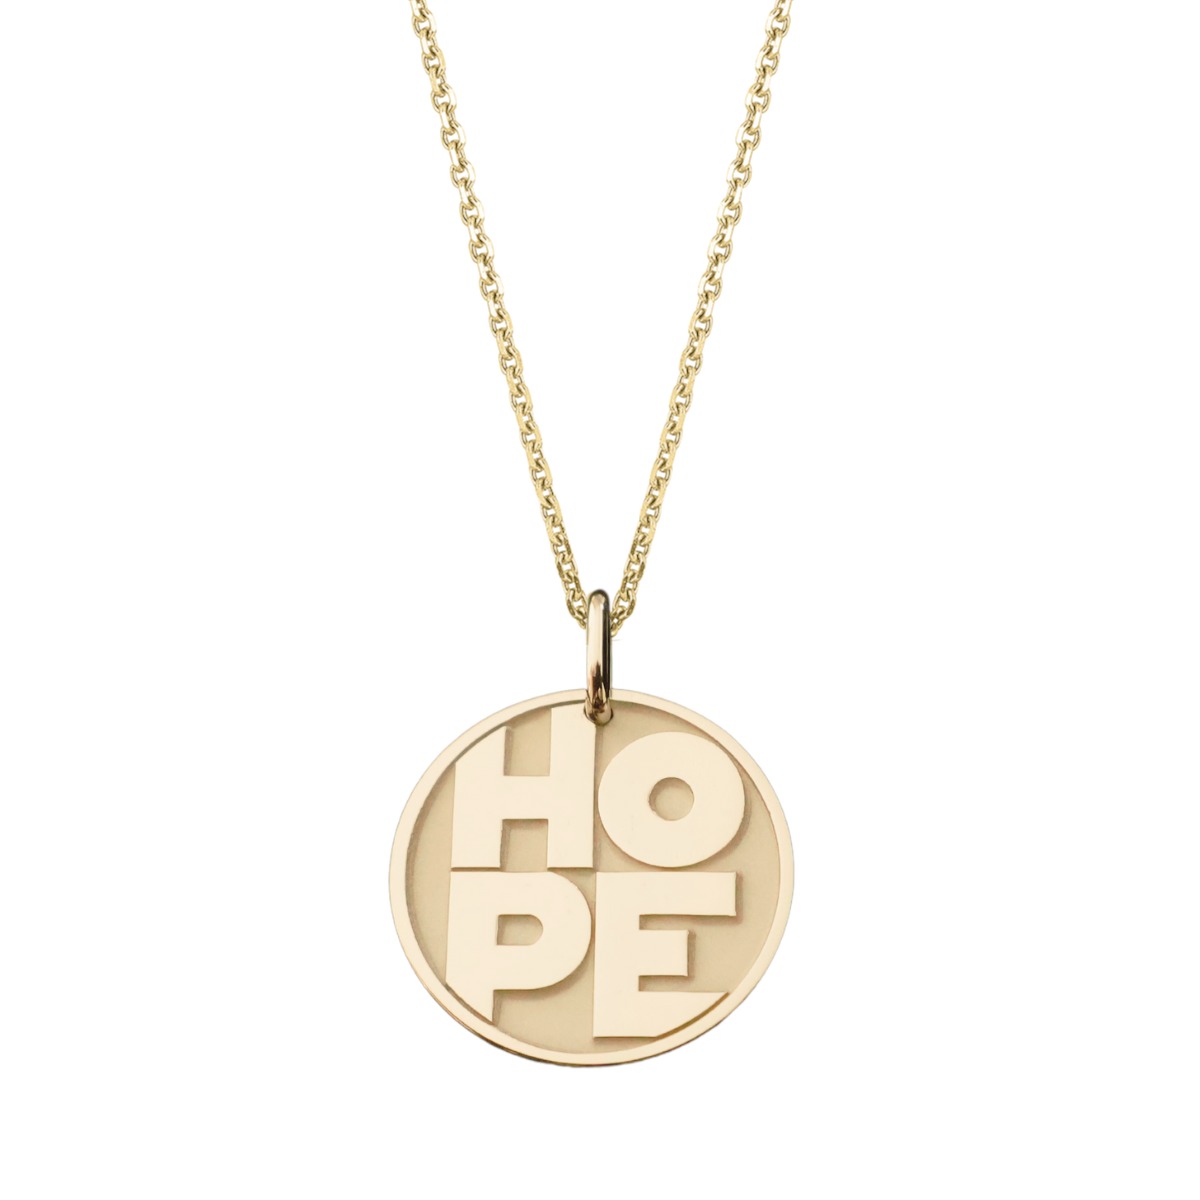 pendentif medaille hope, espoir or jaune 18 carats